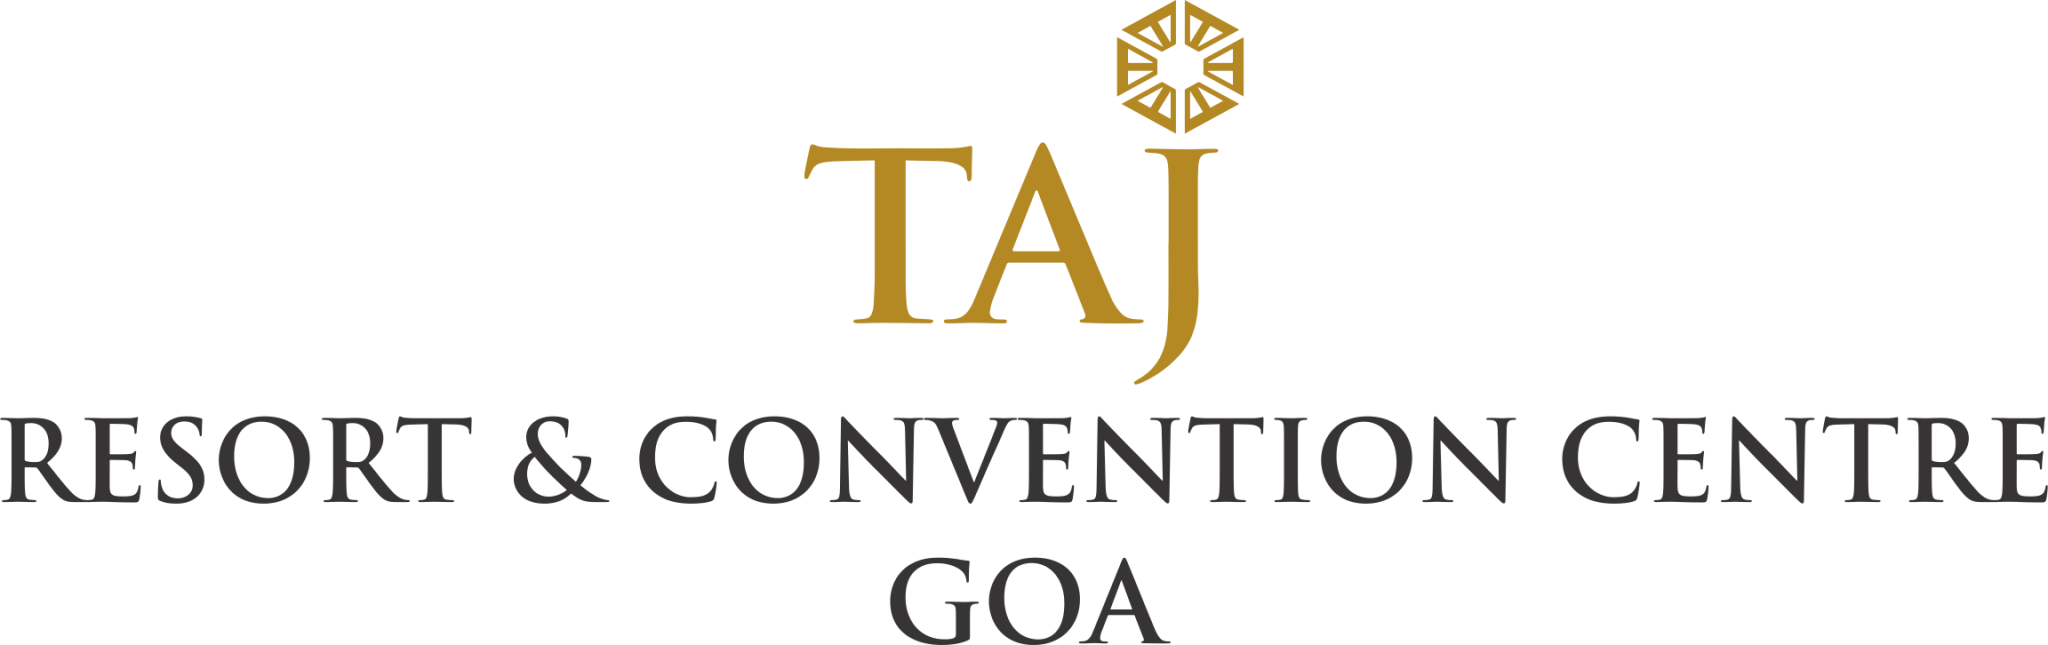 TAJ-RESORT-CONVENTION-CENTRE-GOA-LOGO-2048x645